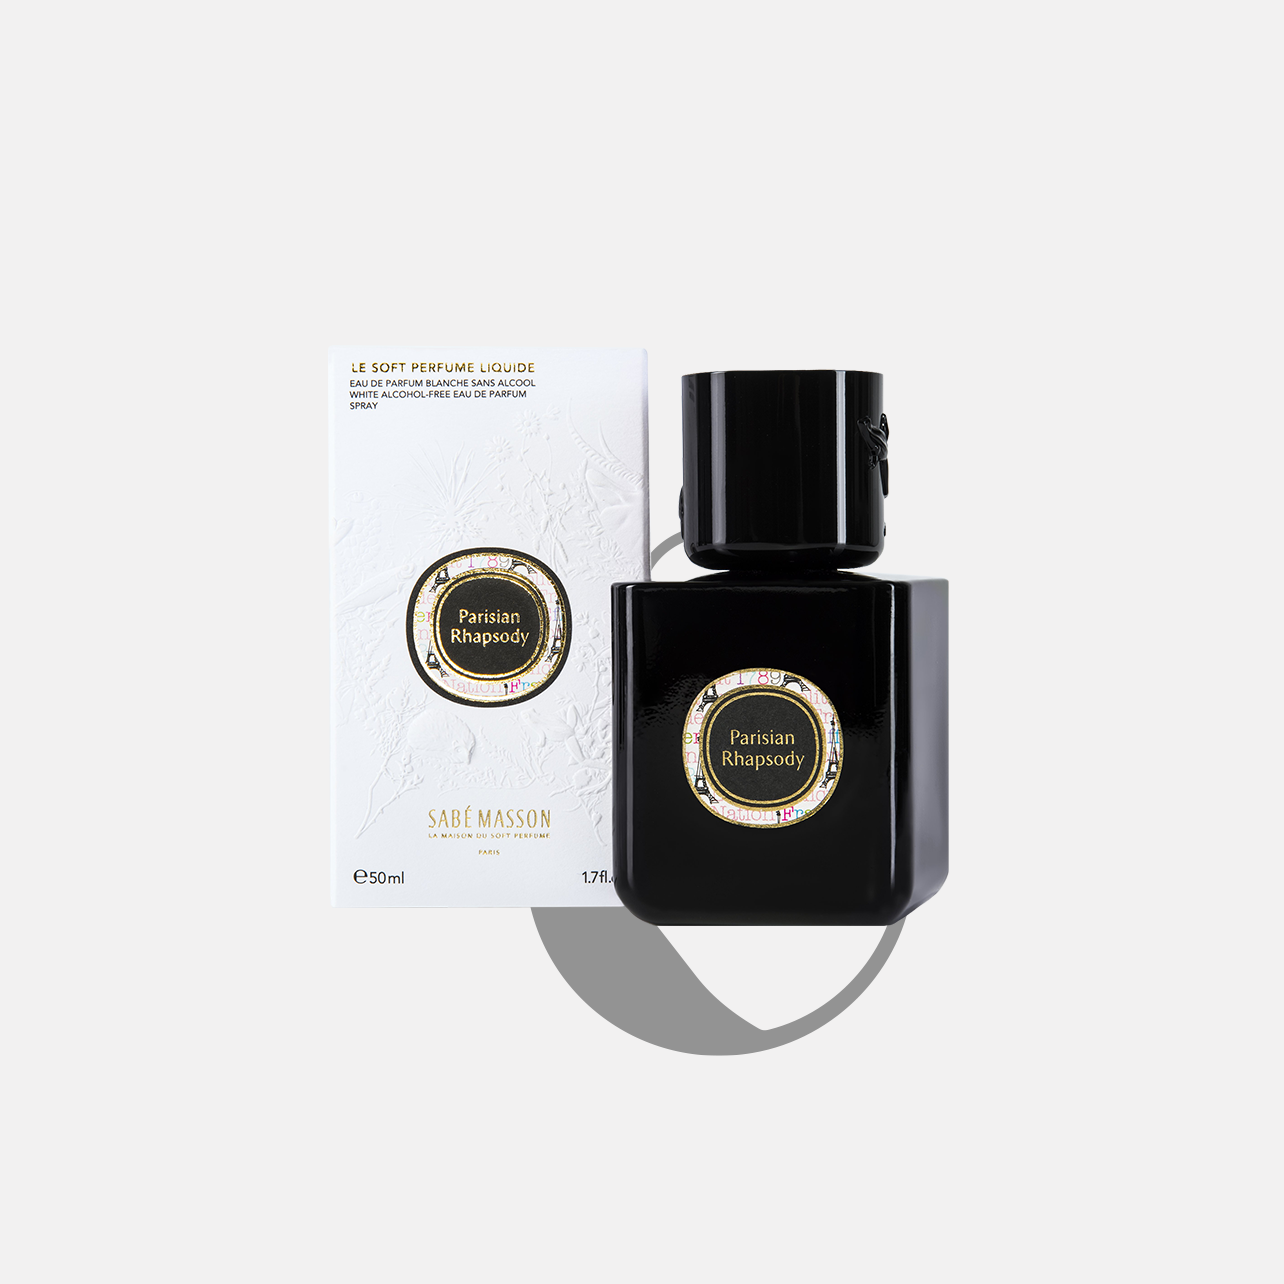 Soft Perfume Liquide - PARISIEN RAPSODY